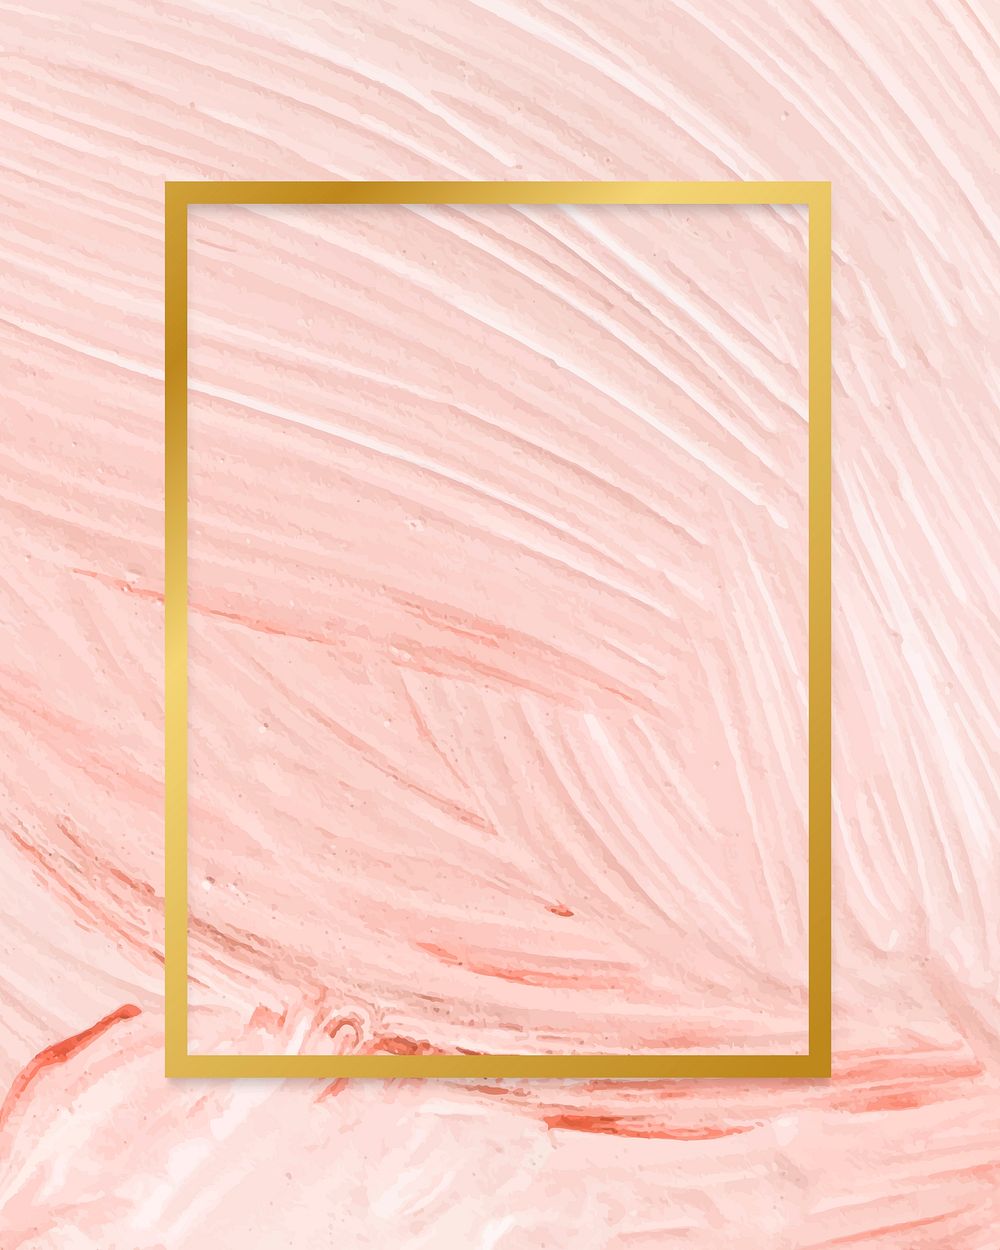 Gold rectangle frame on a pastel pink paintbrush stroke patterned background vector